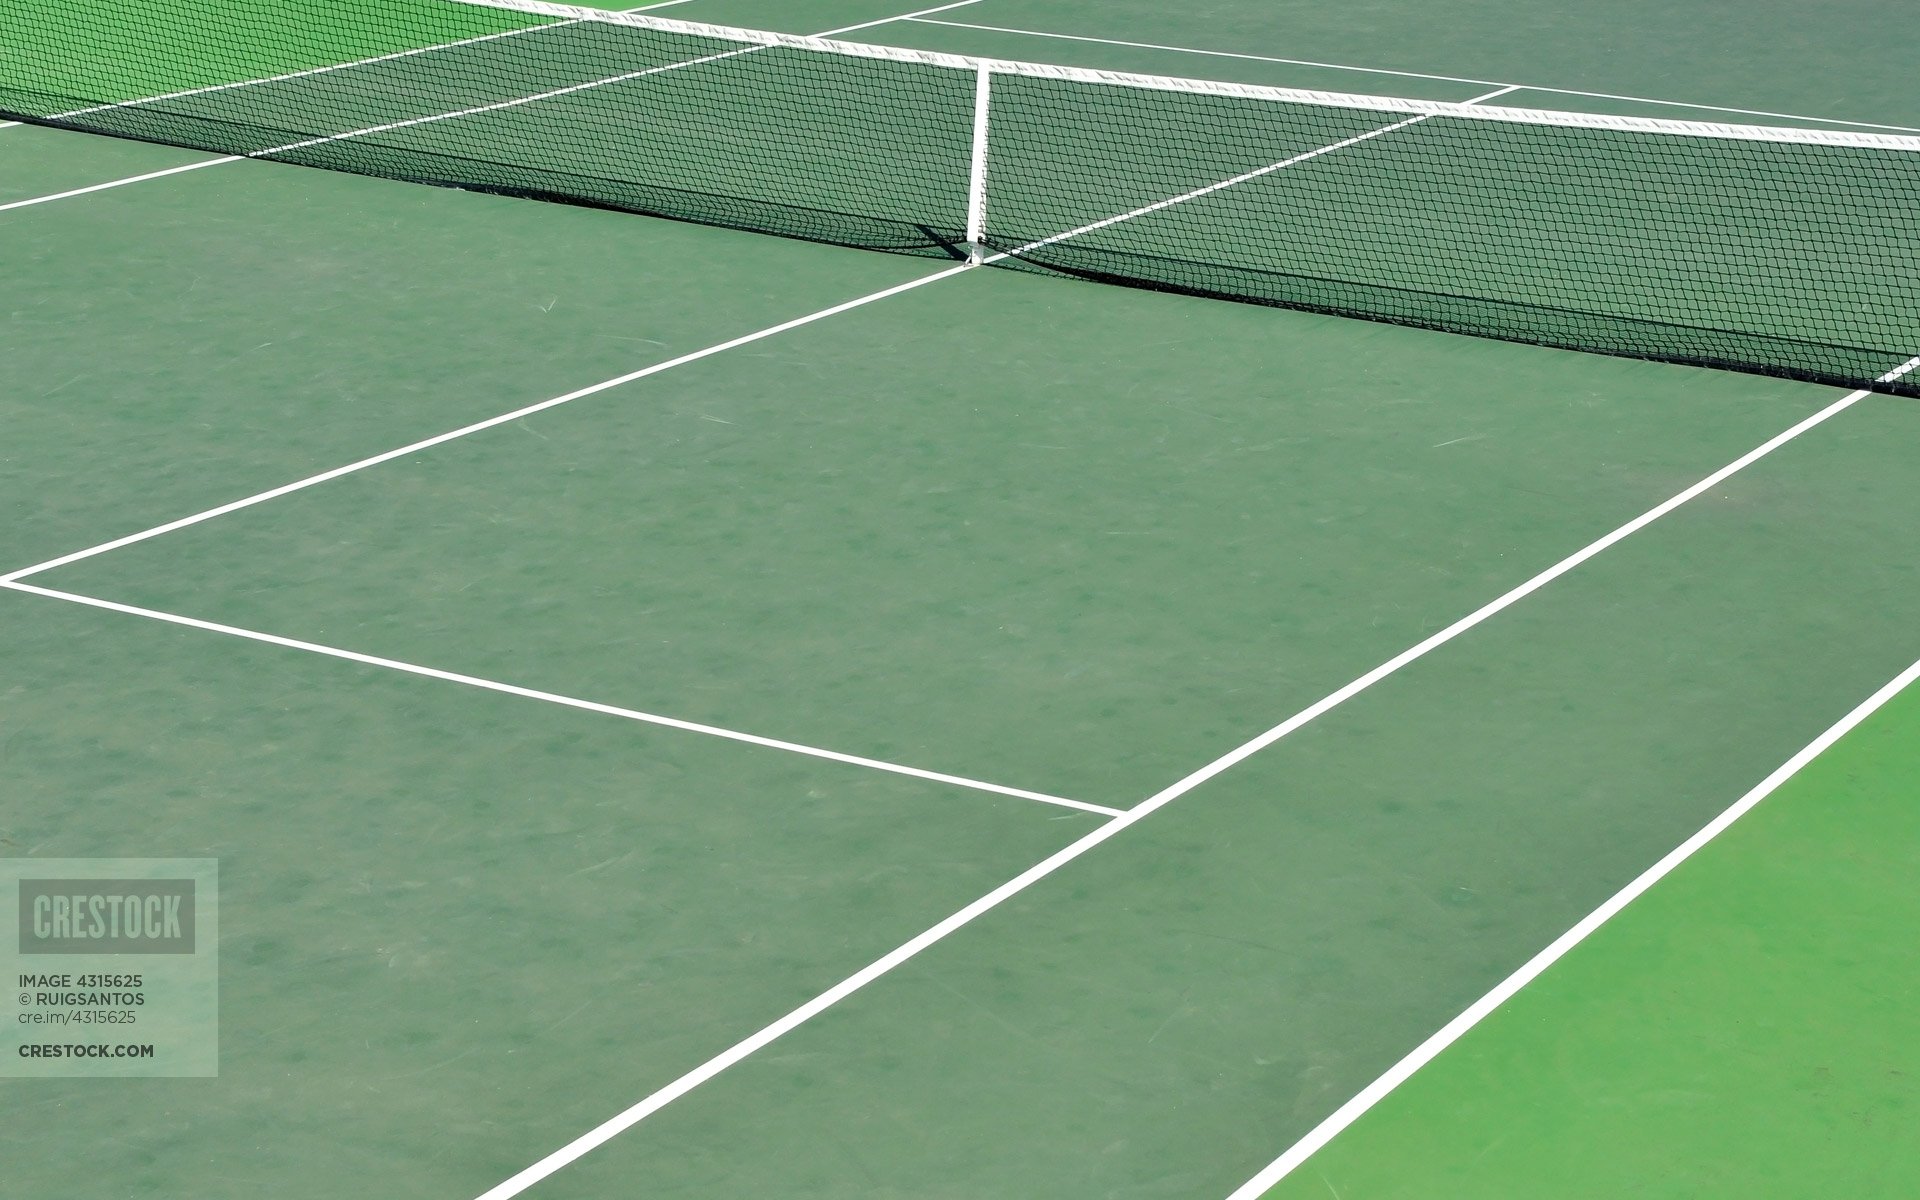 Tennis Background Images - Free Download on Freepik